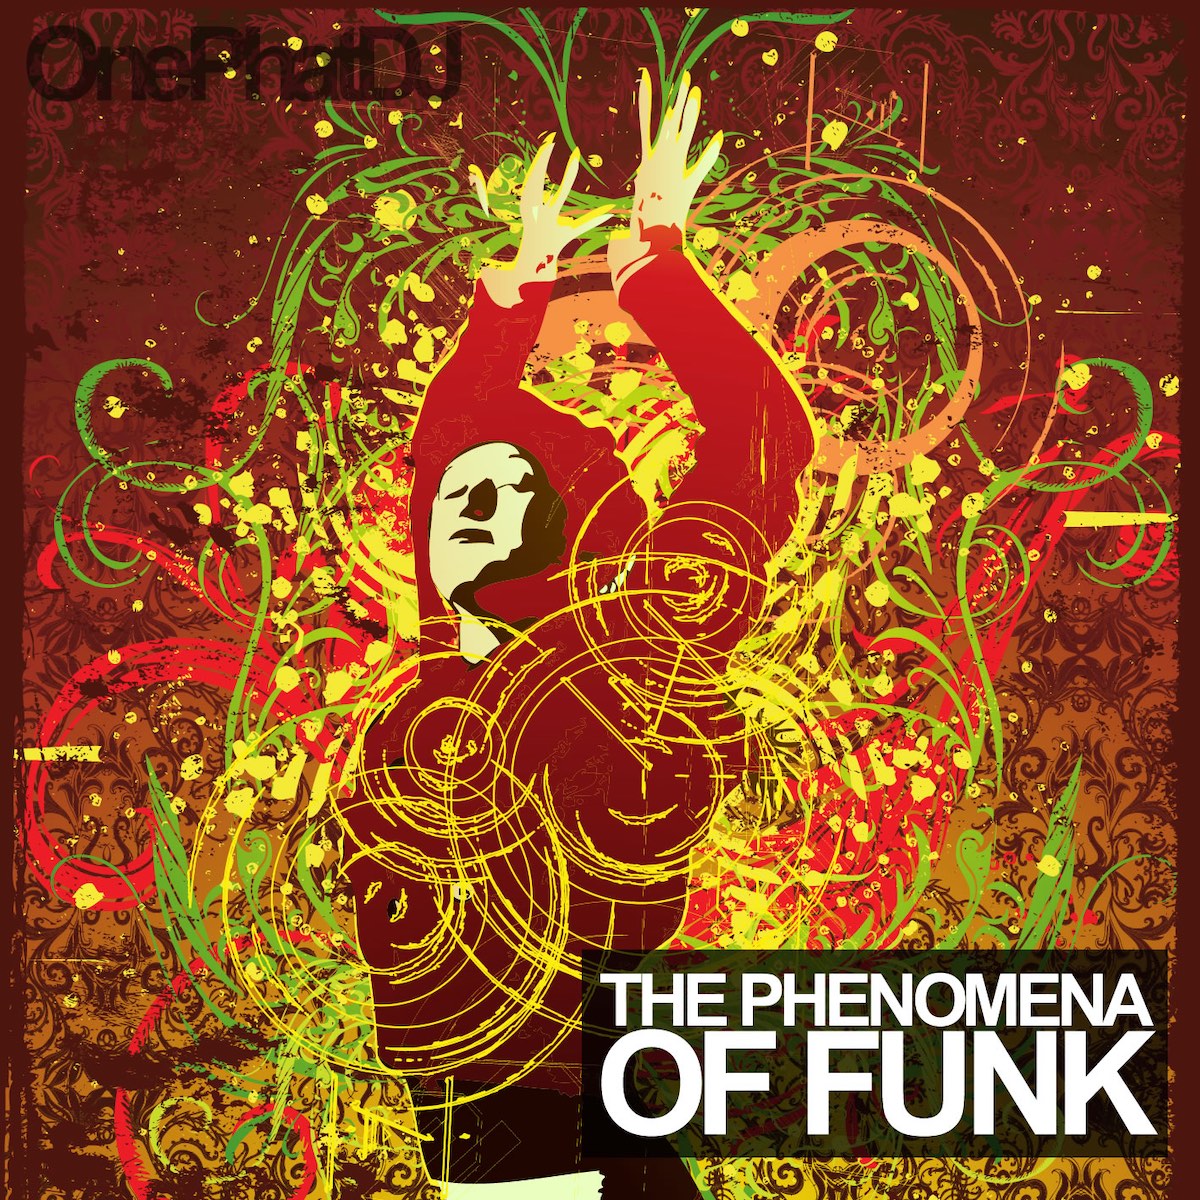 The Phenomena of Funk